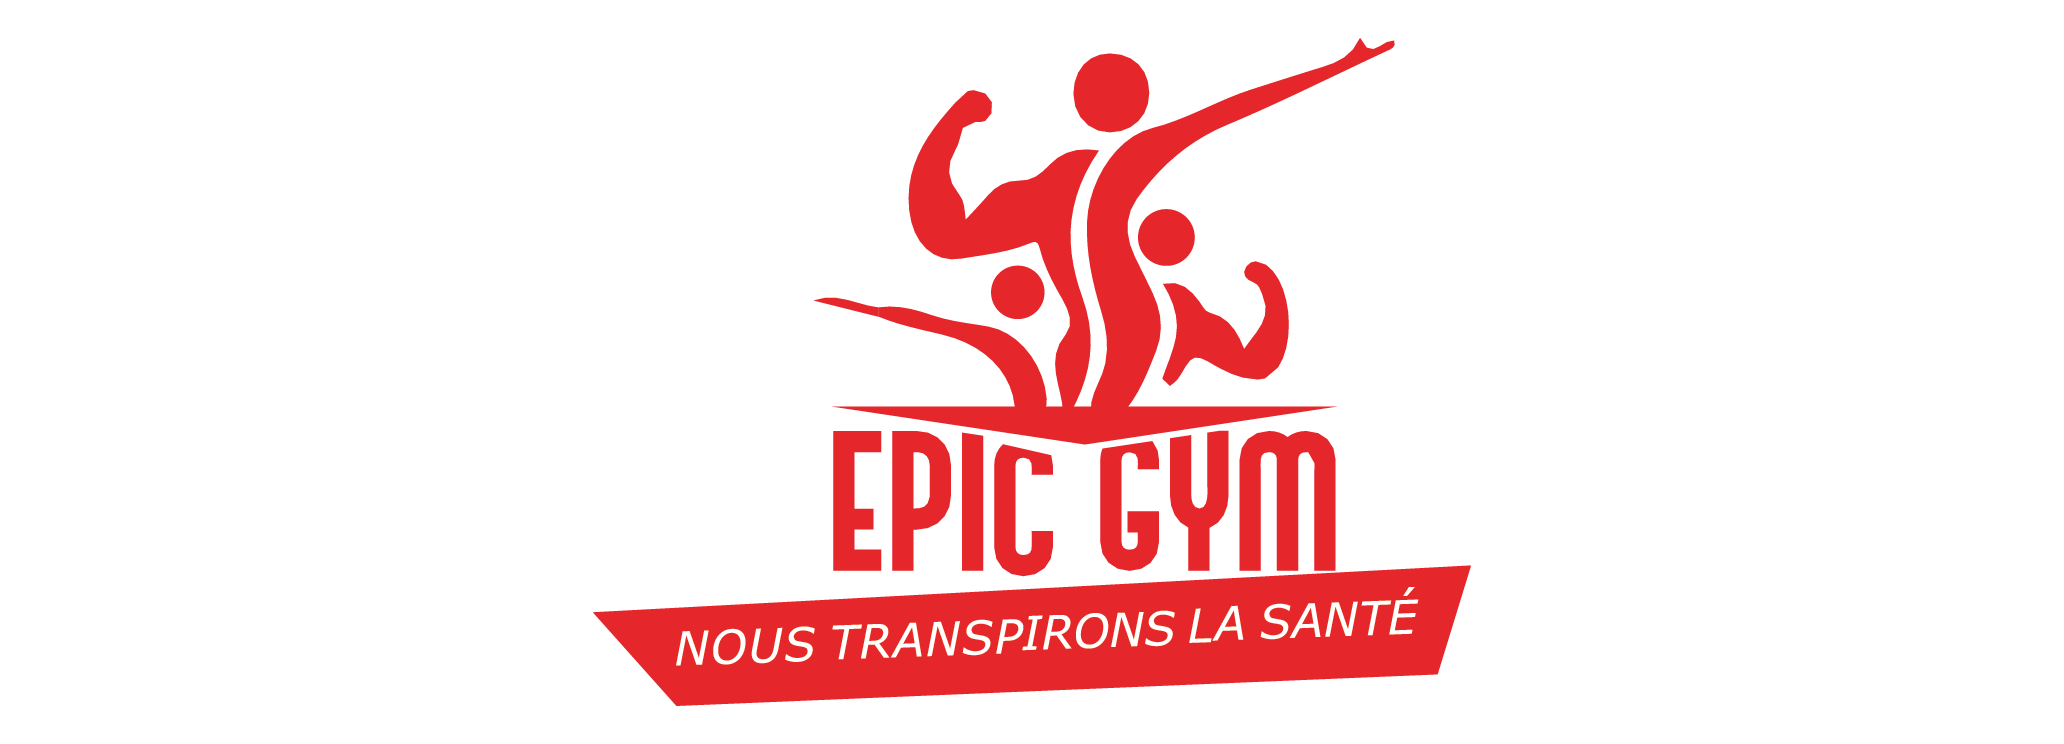 Epic Gym logo